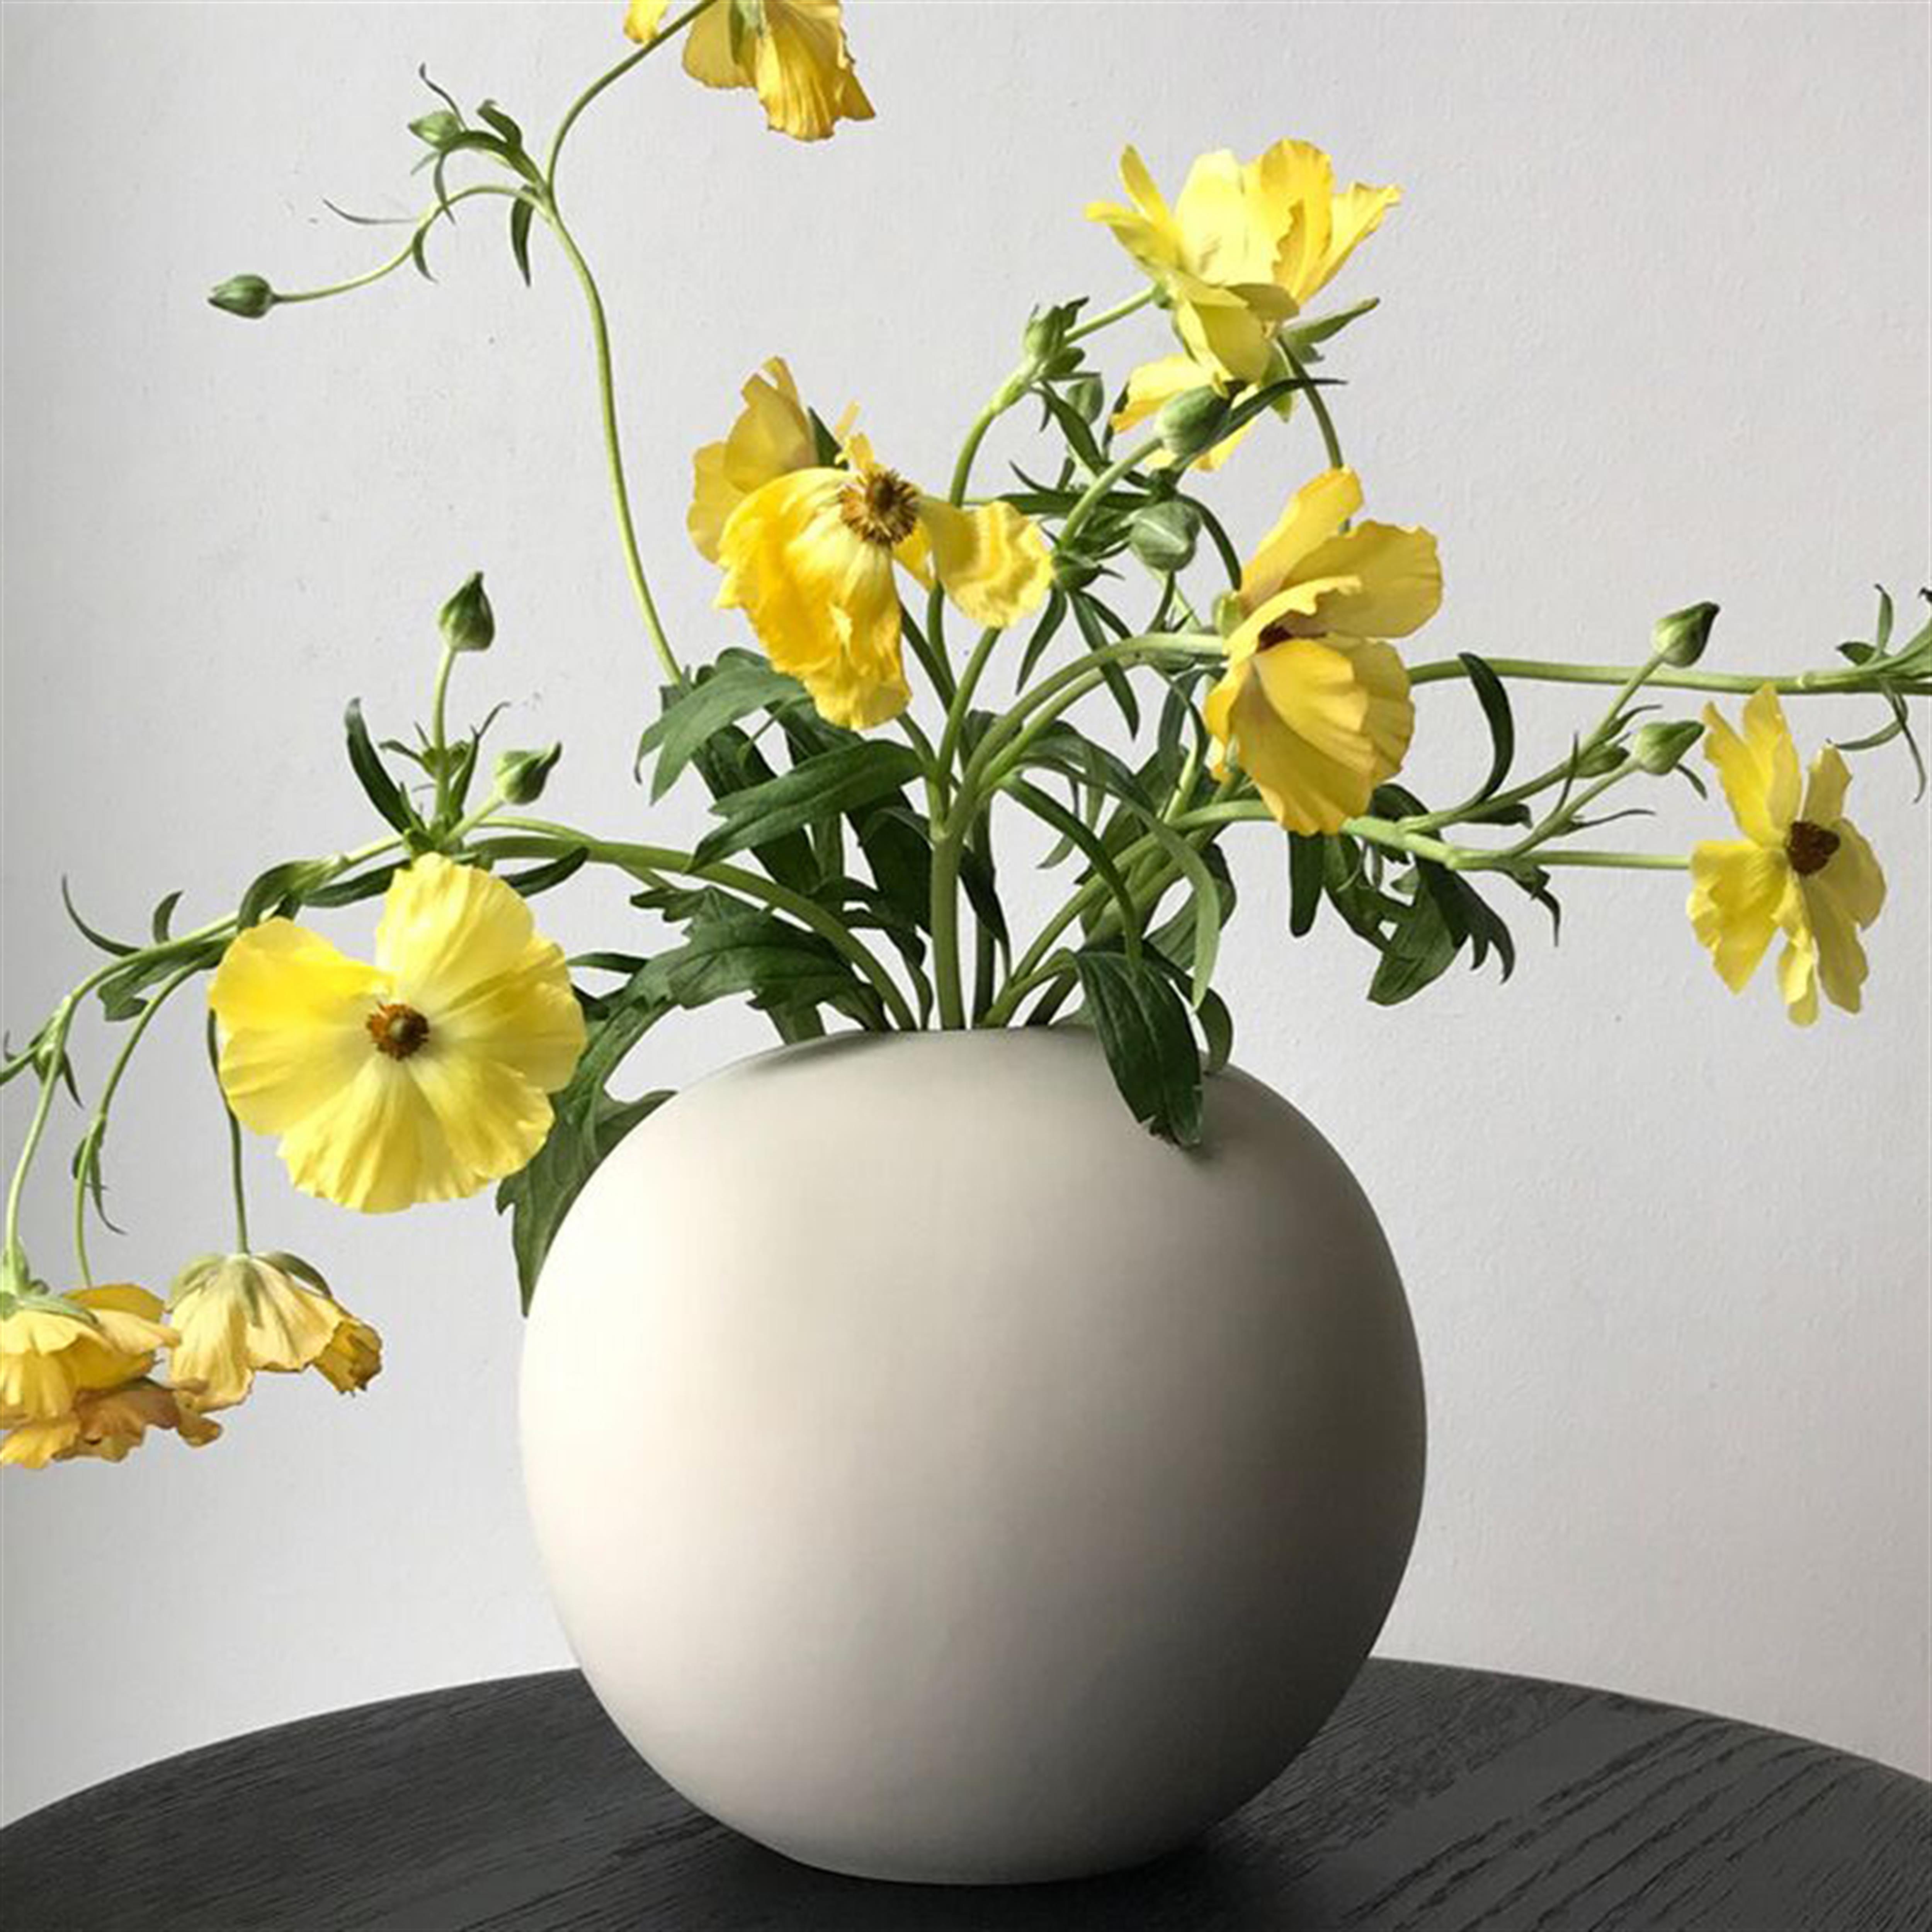 Cooee Design Vase Ball Mint 10cm